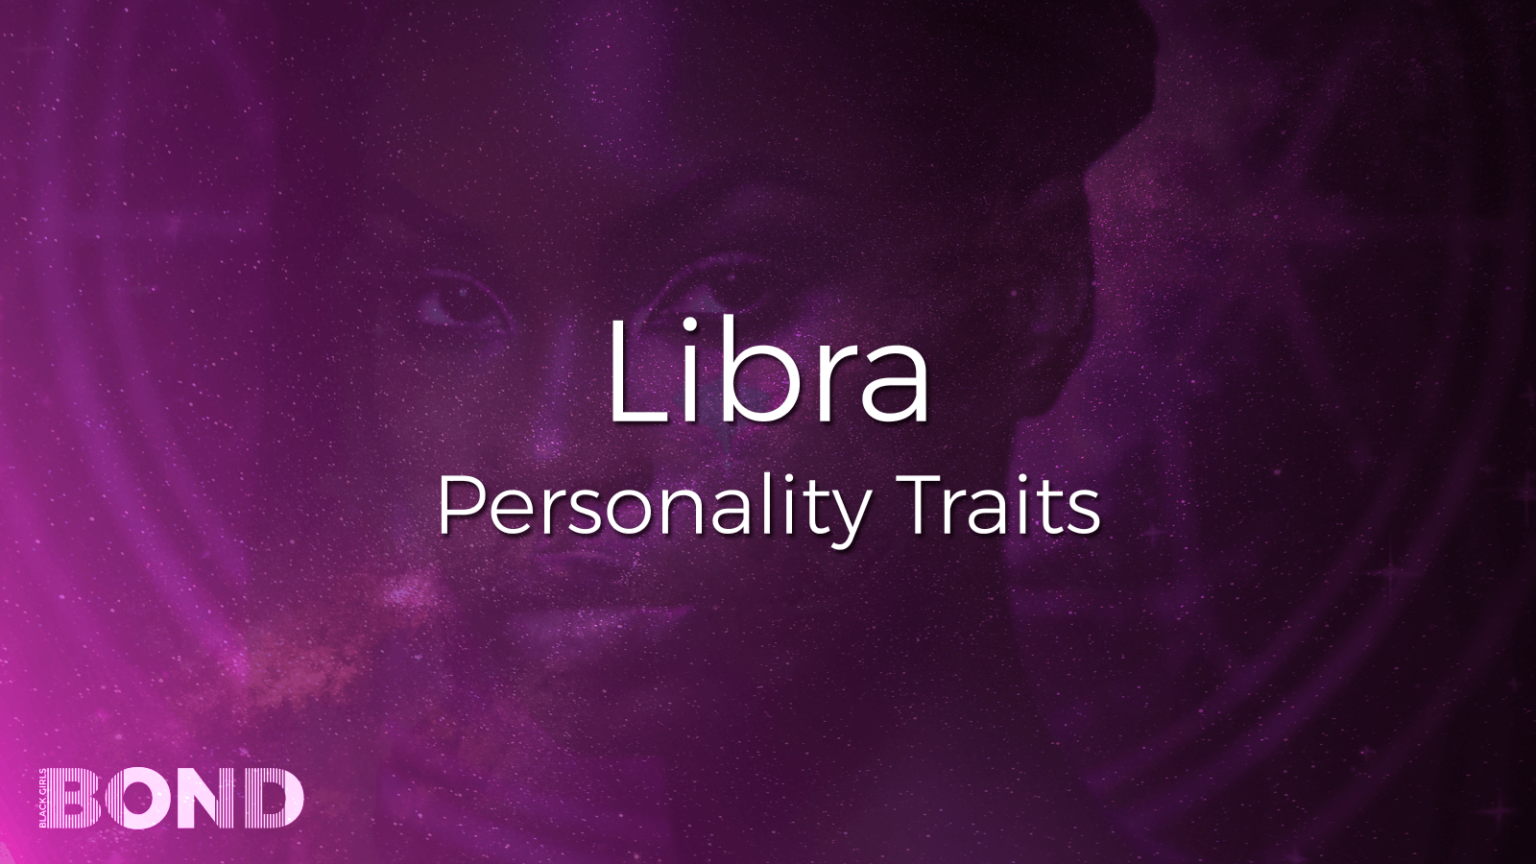 Libra Personality Traits